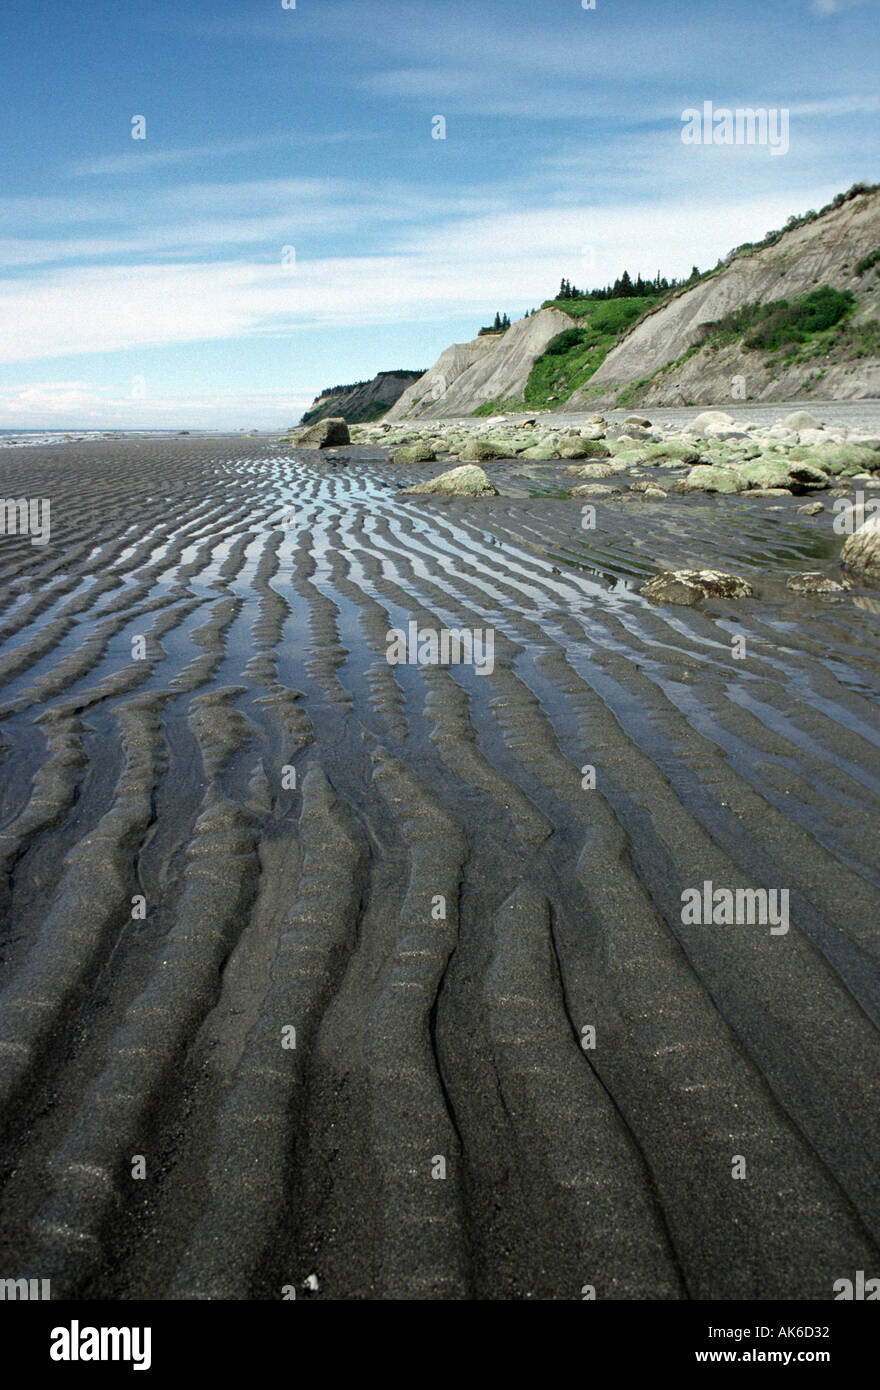 Ripple marks on a tidal flat near Homer Alaska Stock Photo